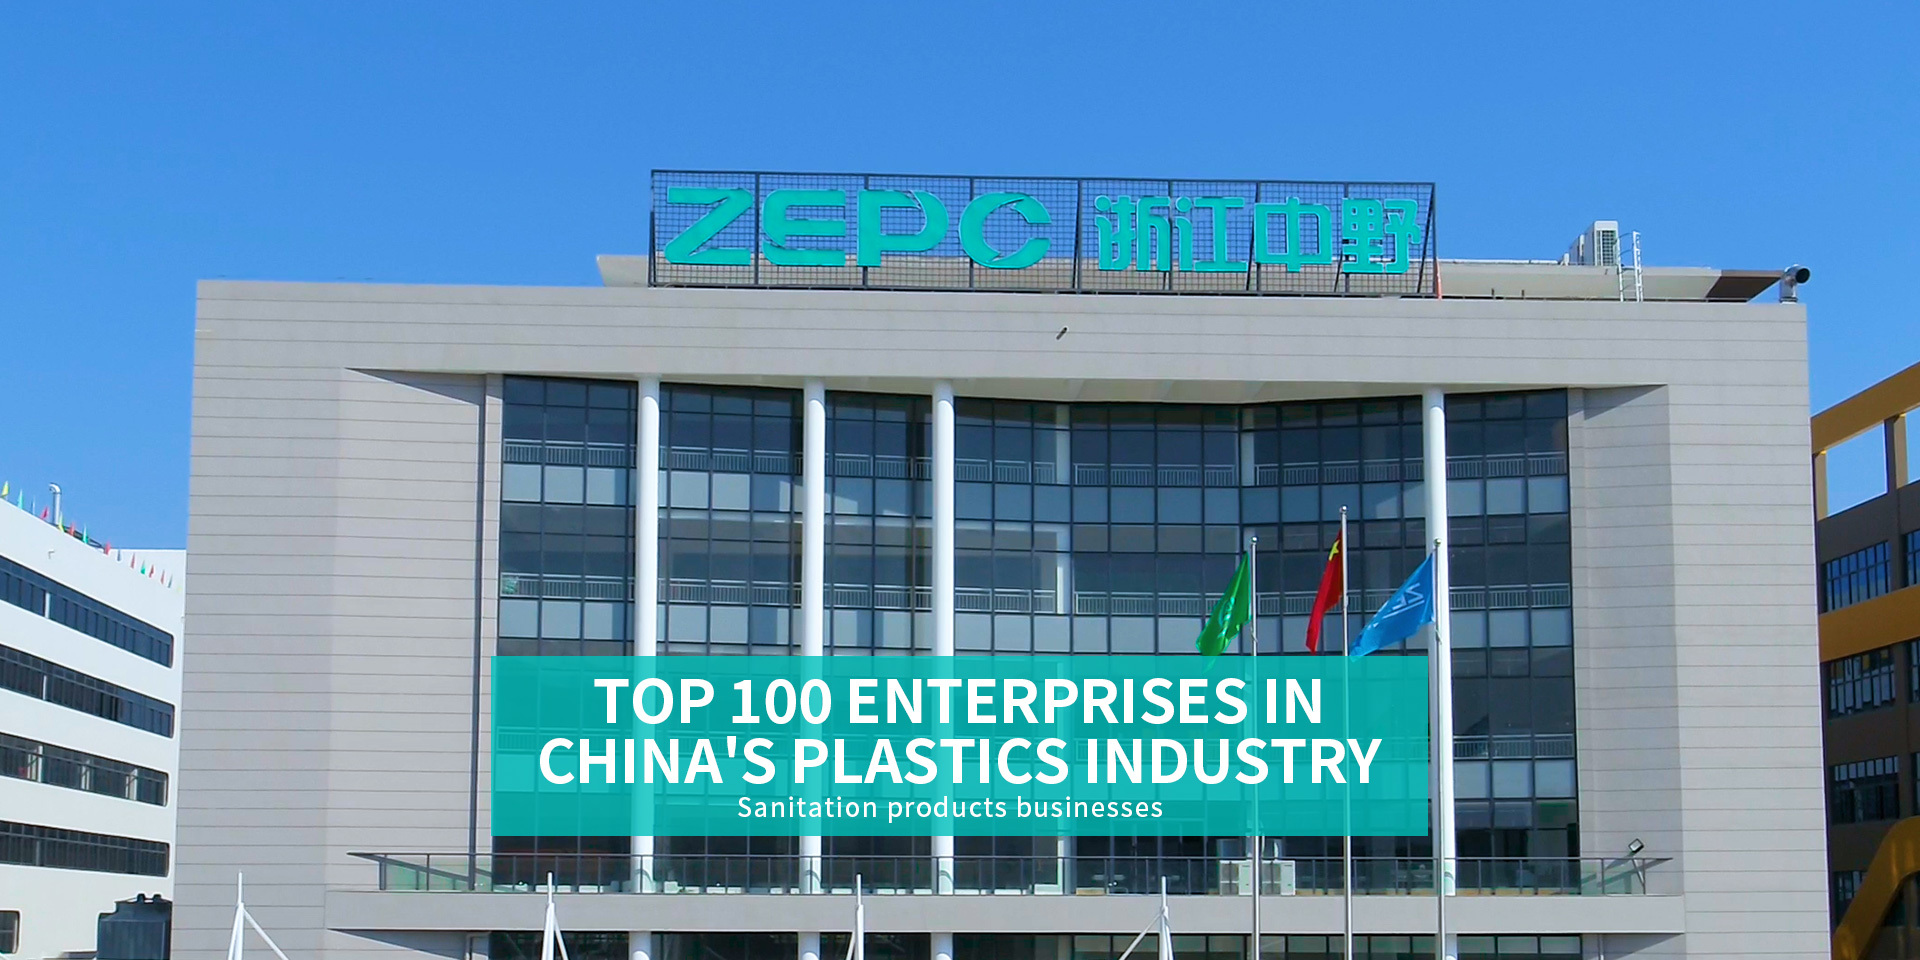 Top 100 enterprises in China's plastics industry